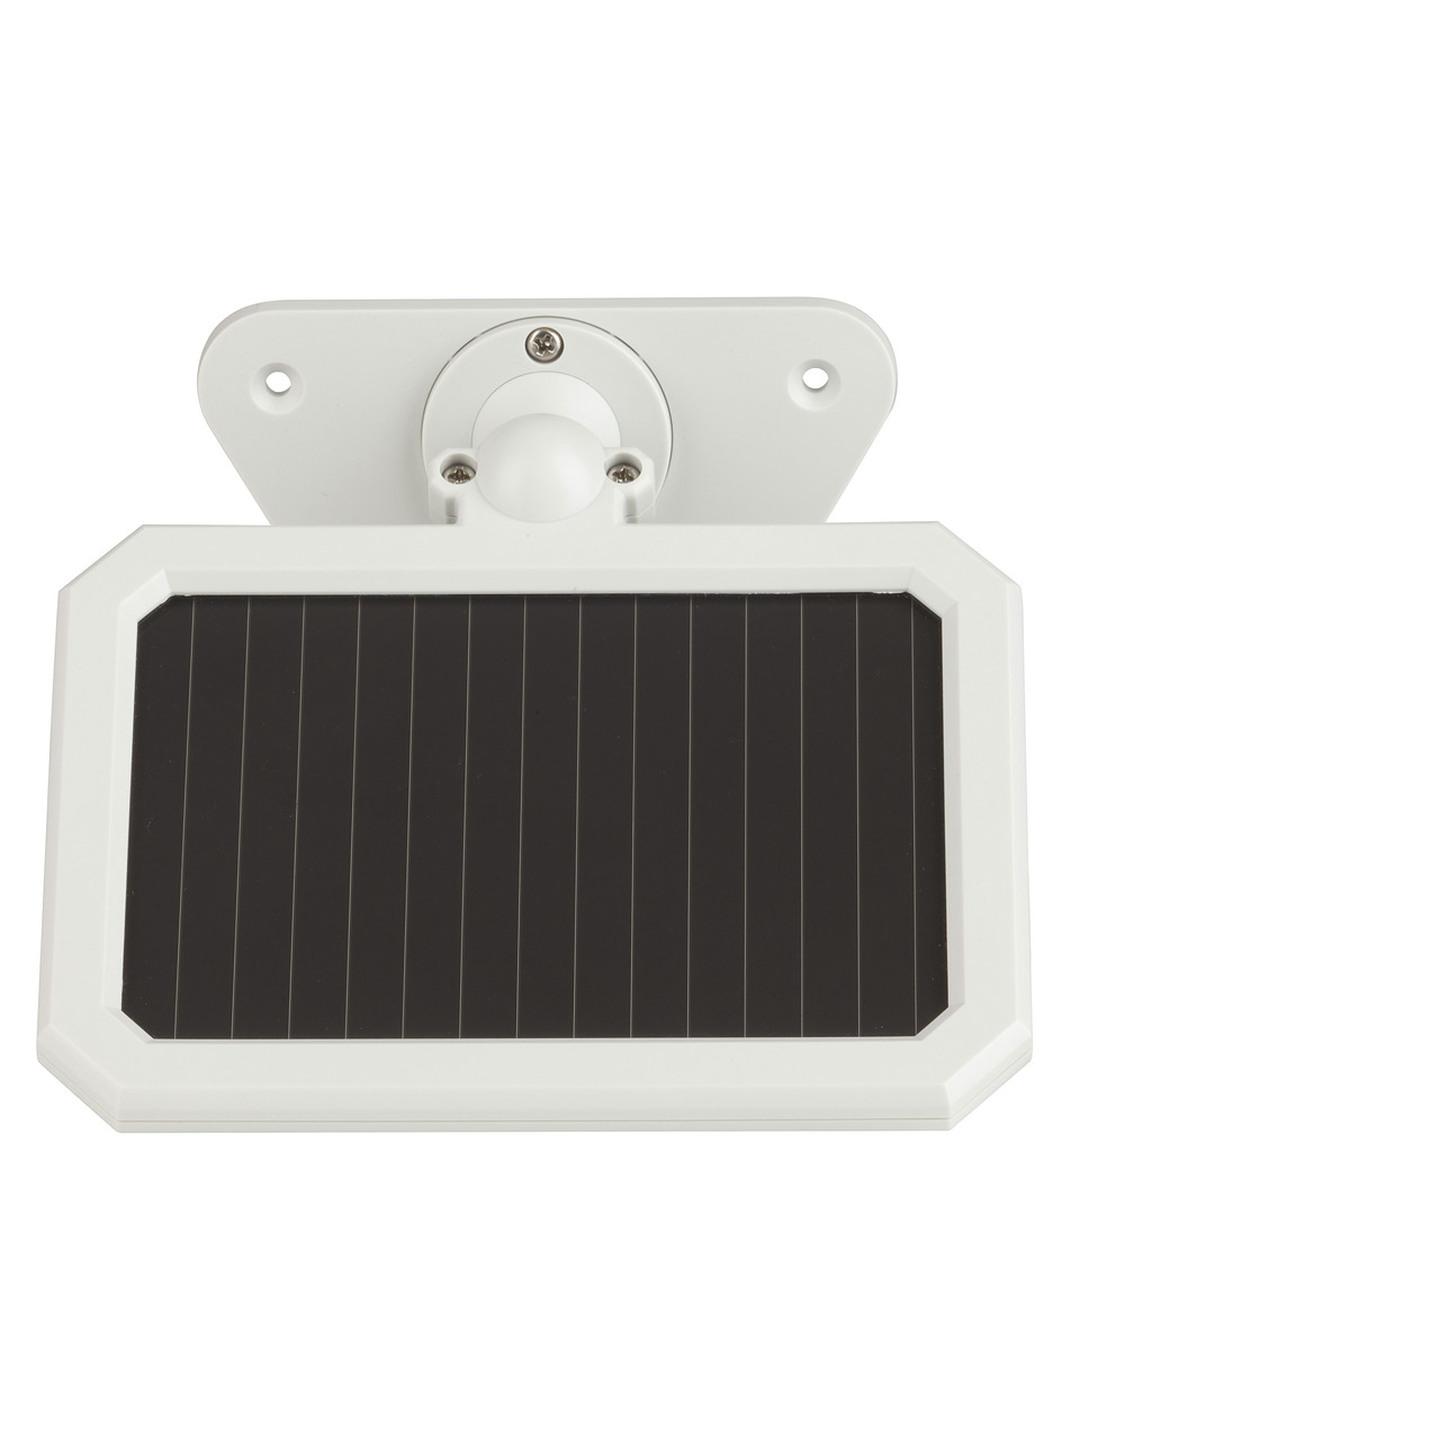 Solar Powered Wireless IR Annunciator Kit